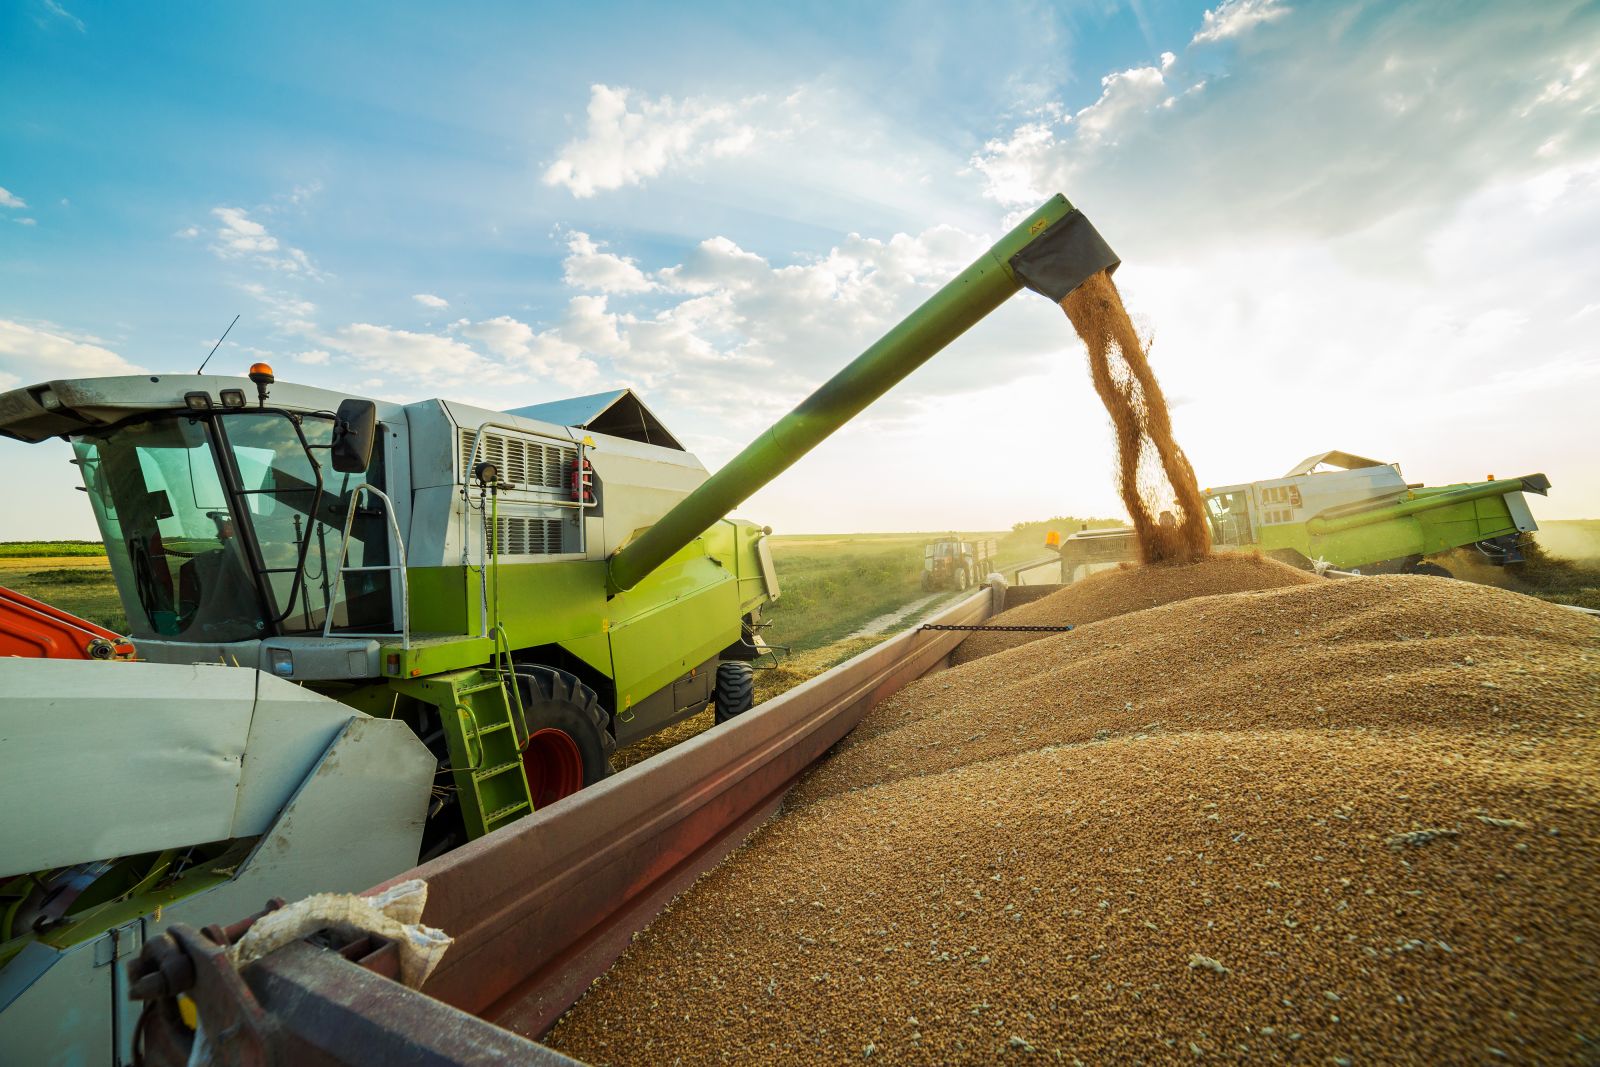 Farming - Unloading grain by oticki via Shutterstock